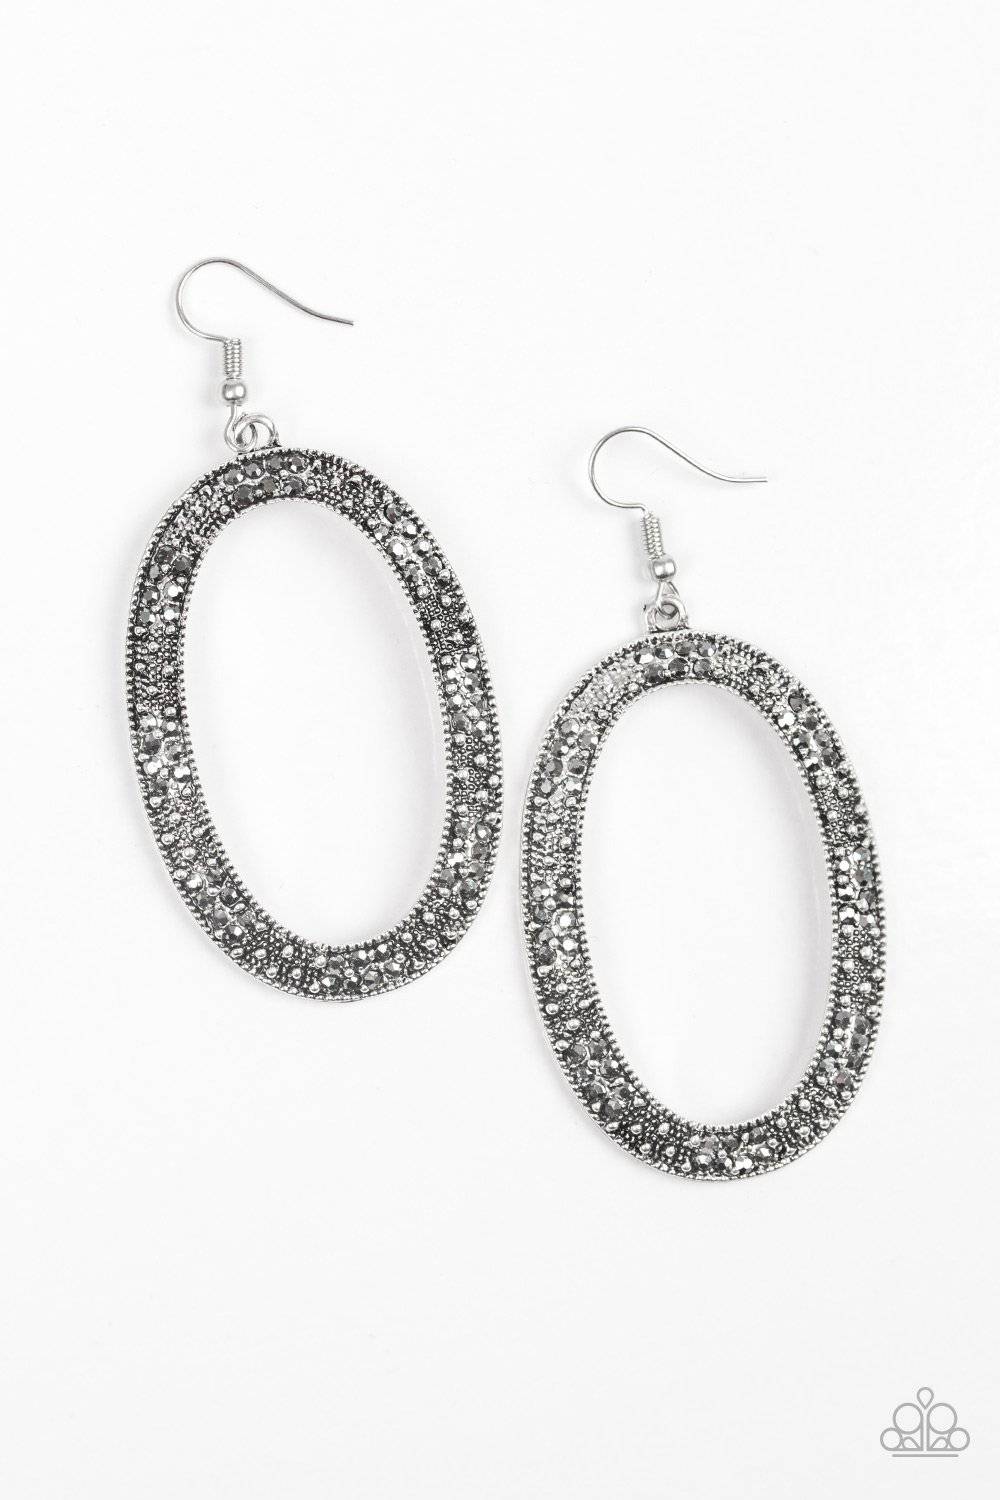 Rhinestone Rebel - Silver Rhinestone Earrings - Paparazzi Accessories - GlaMarous Titi Jewels